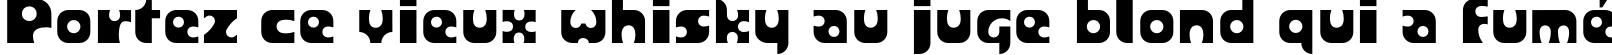 Пример написания шрифтом Joker текста на французском